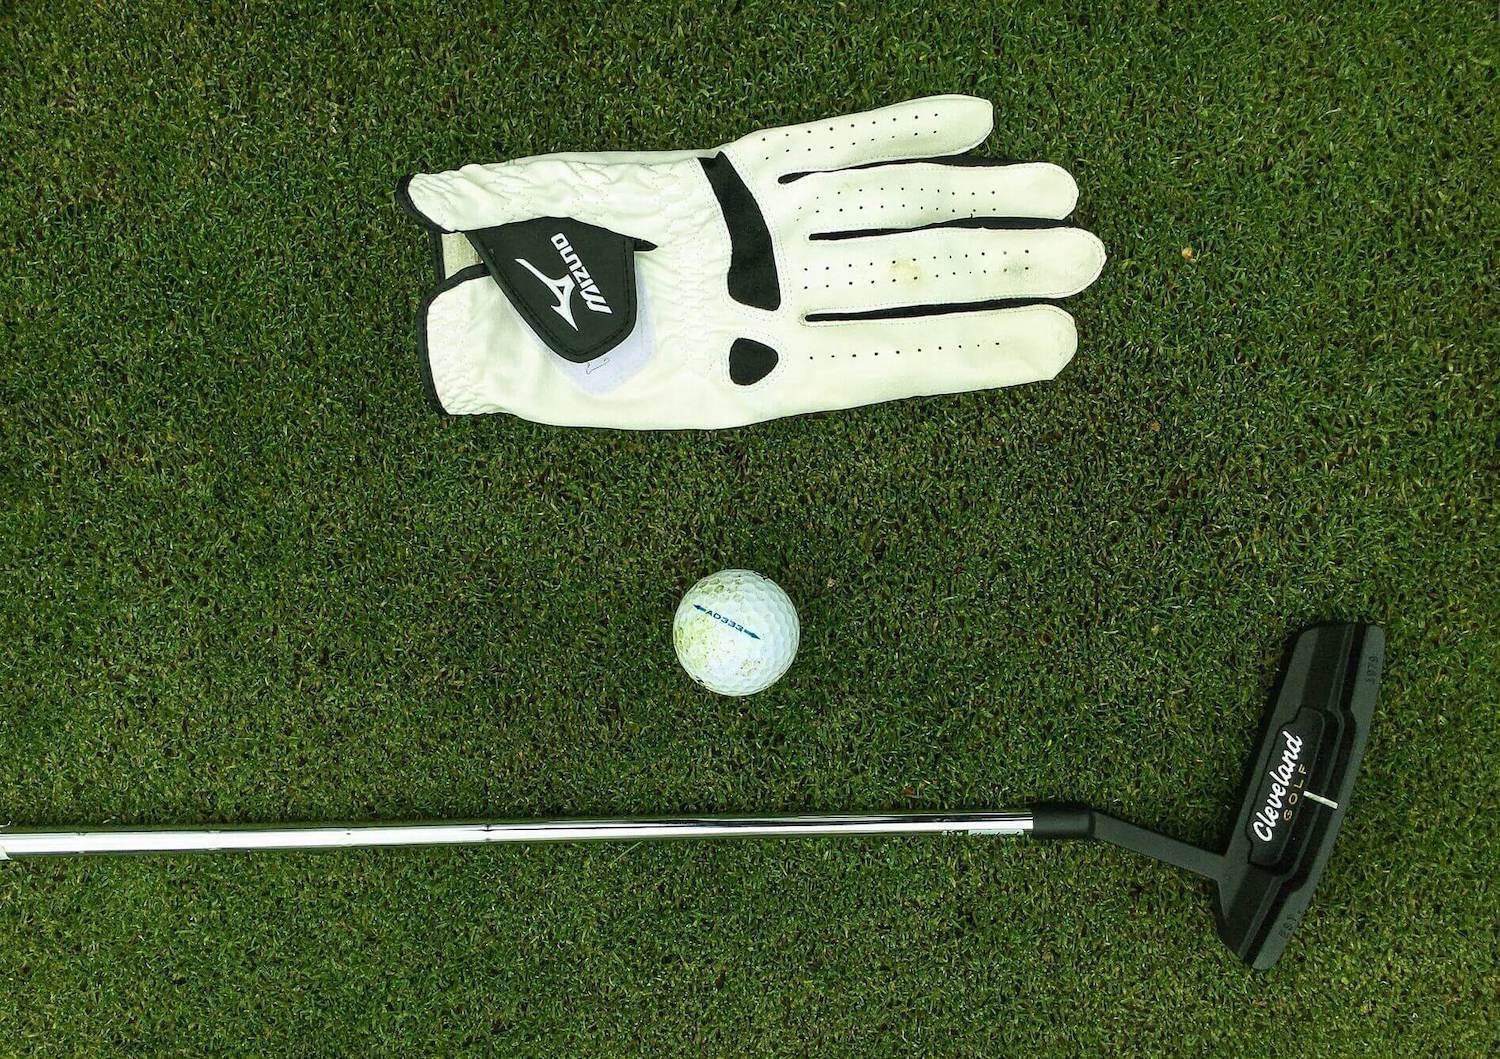 Mizuno golf glove, golf ball and Cleveland golf putter lying on golf course